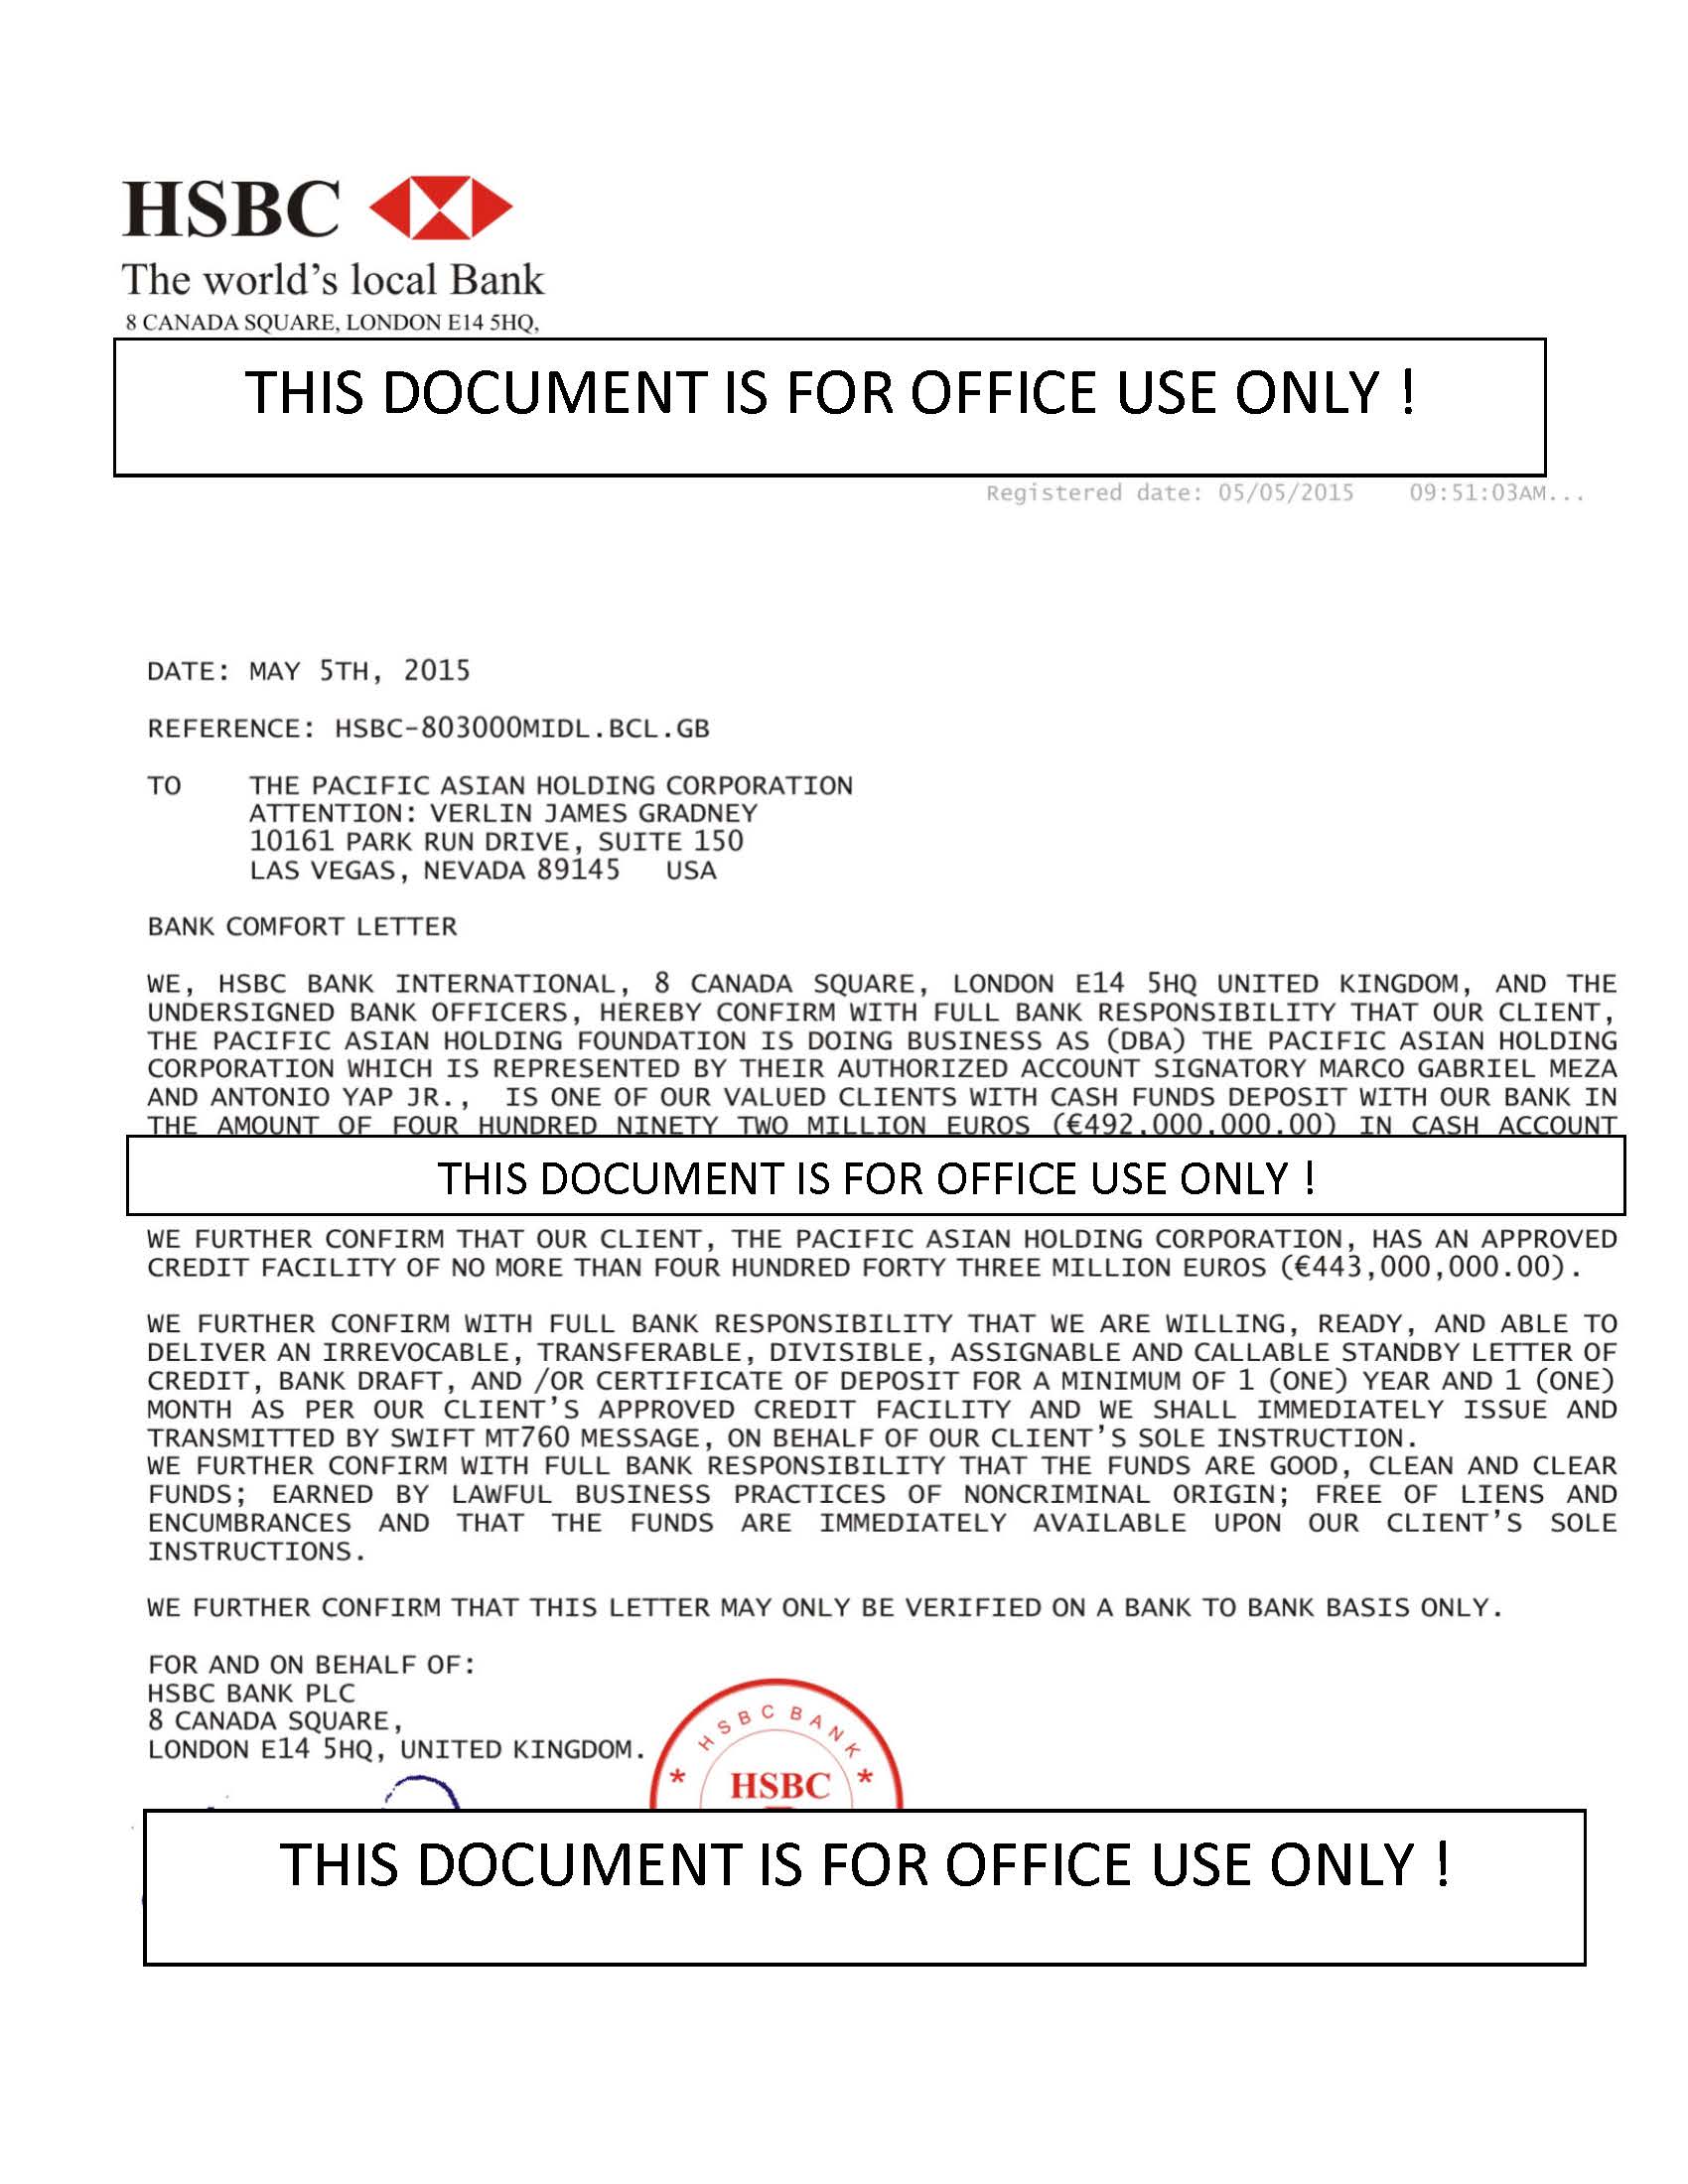 Bank Comfort Letter (Fake/Fraud)